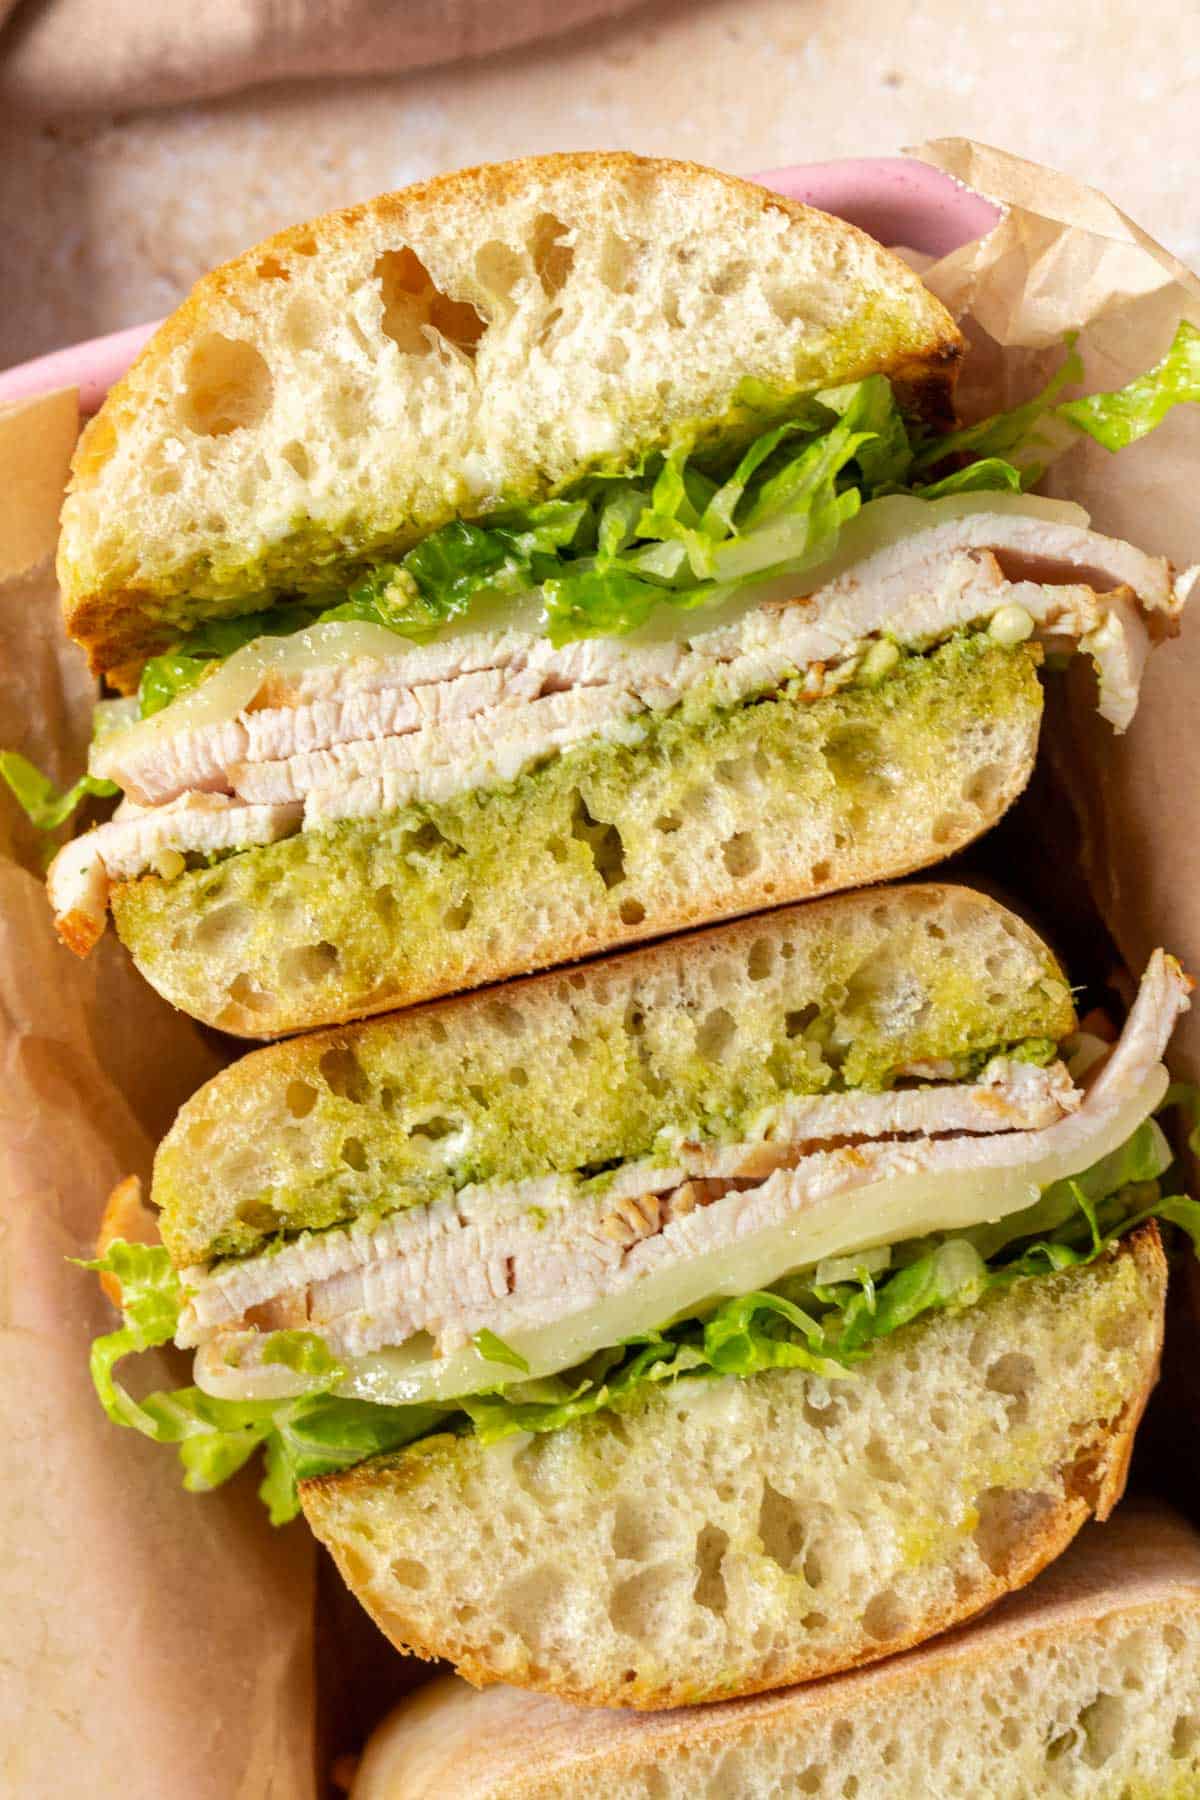 Two pesto turkey sandwiches, facing upwards, showing the interior.